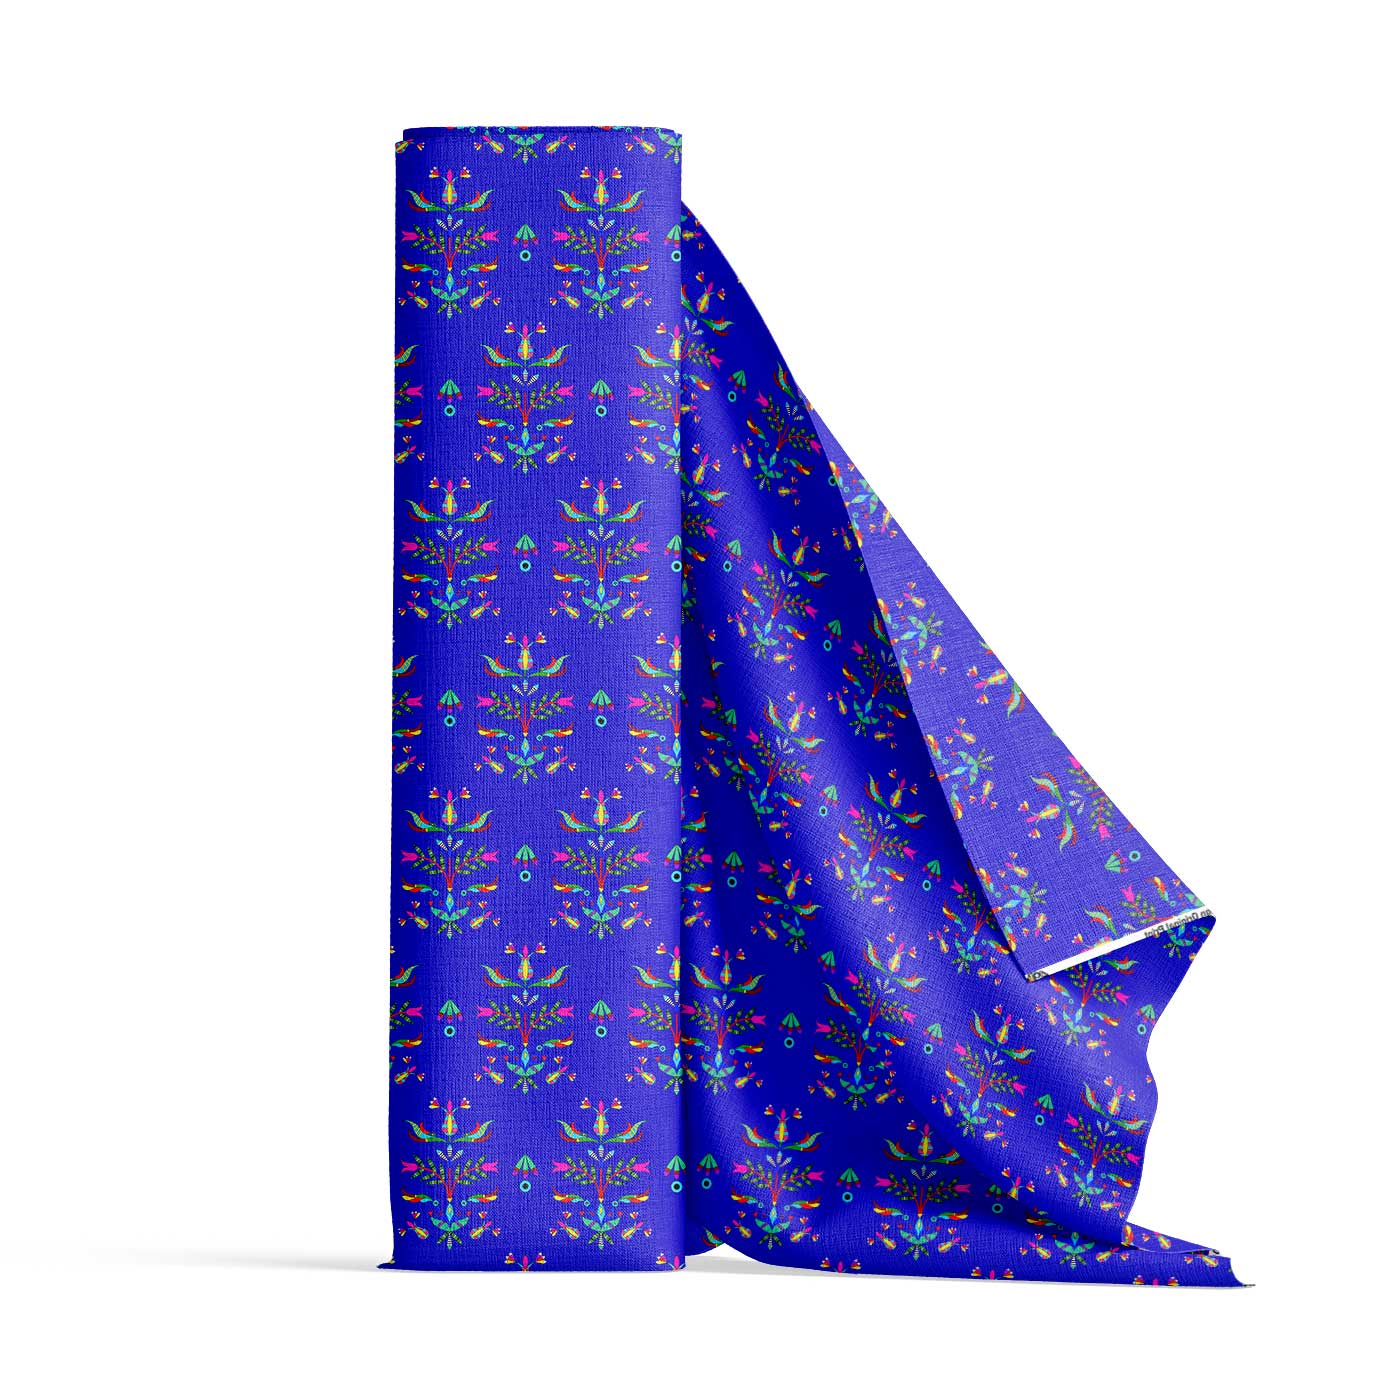 Dakota Damask Blue Satin Fabric By the Yard Pre Order